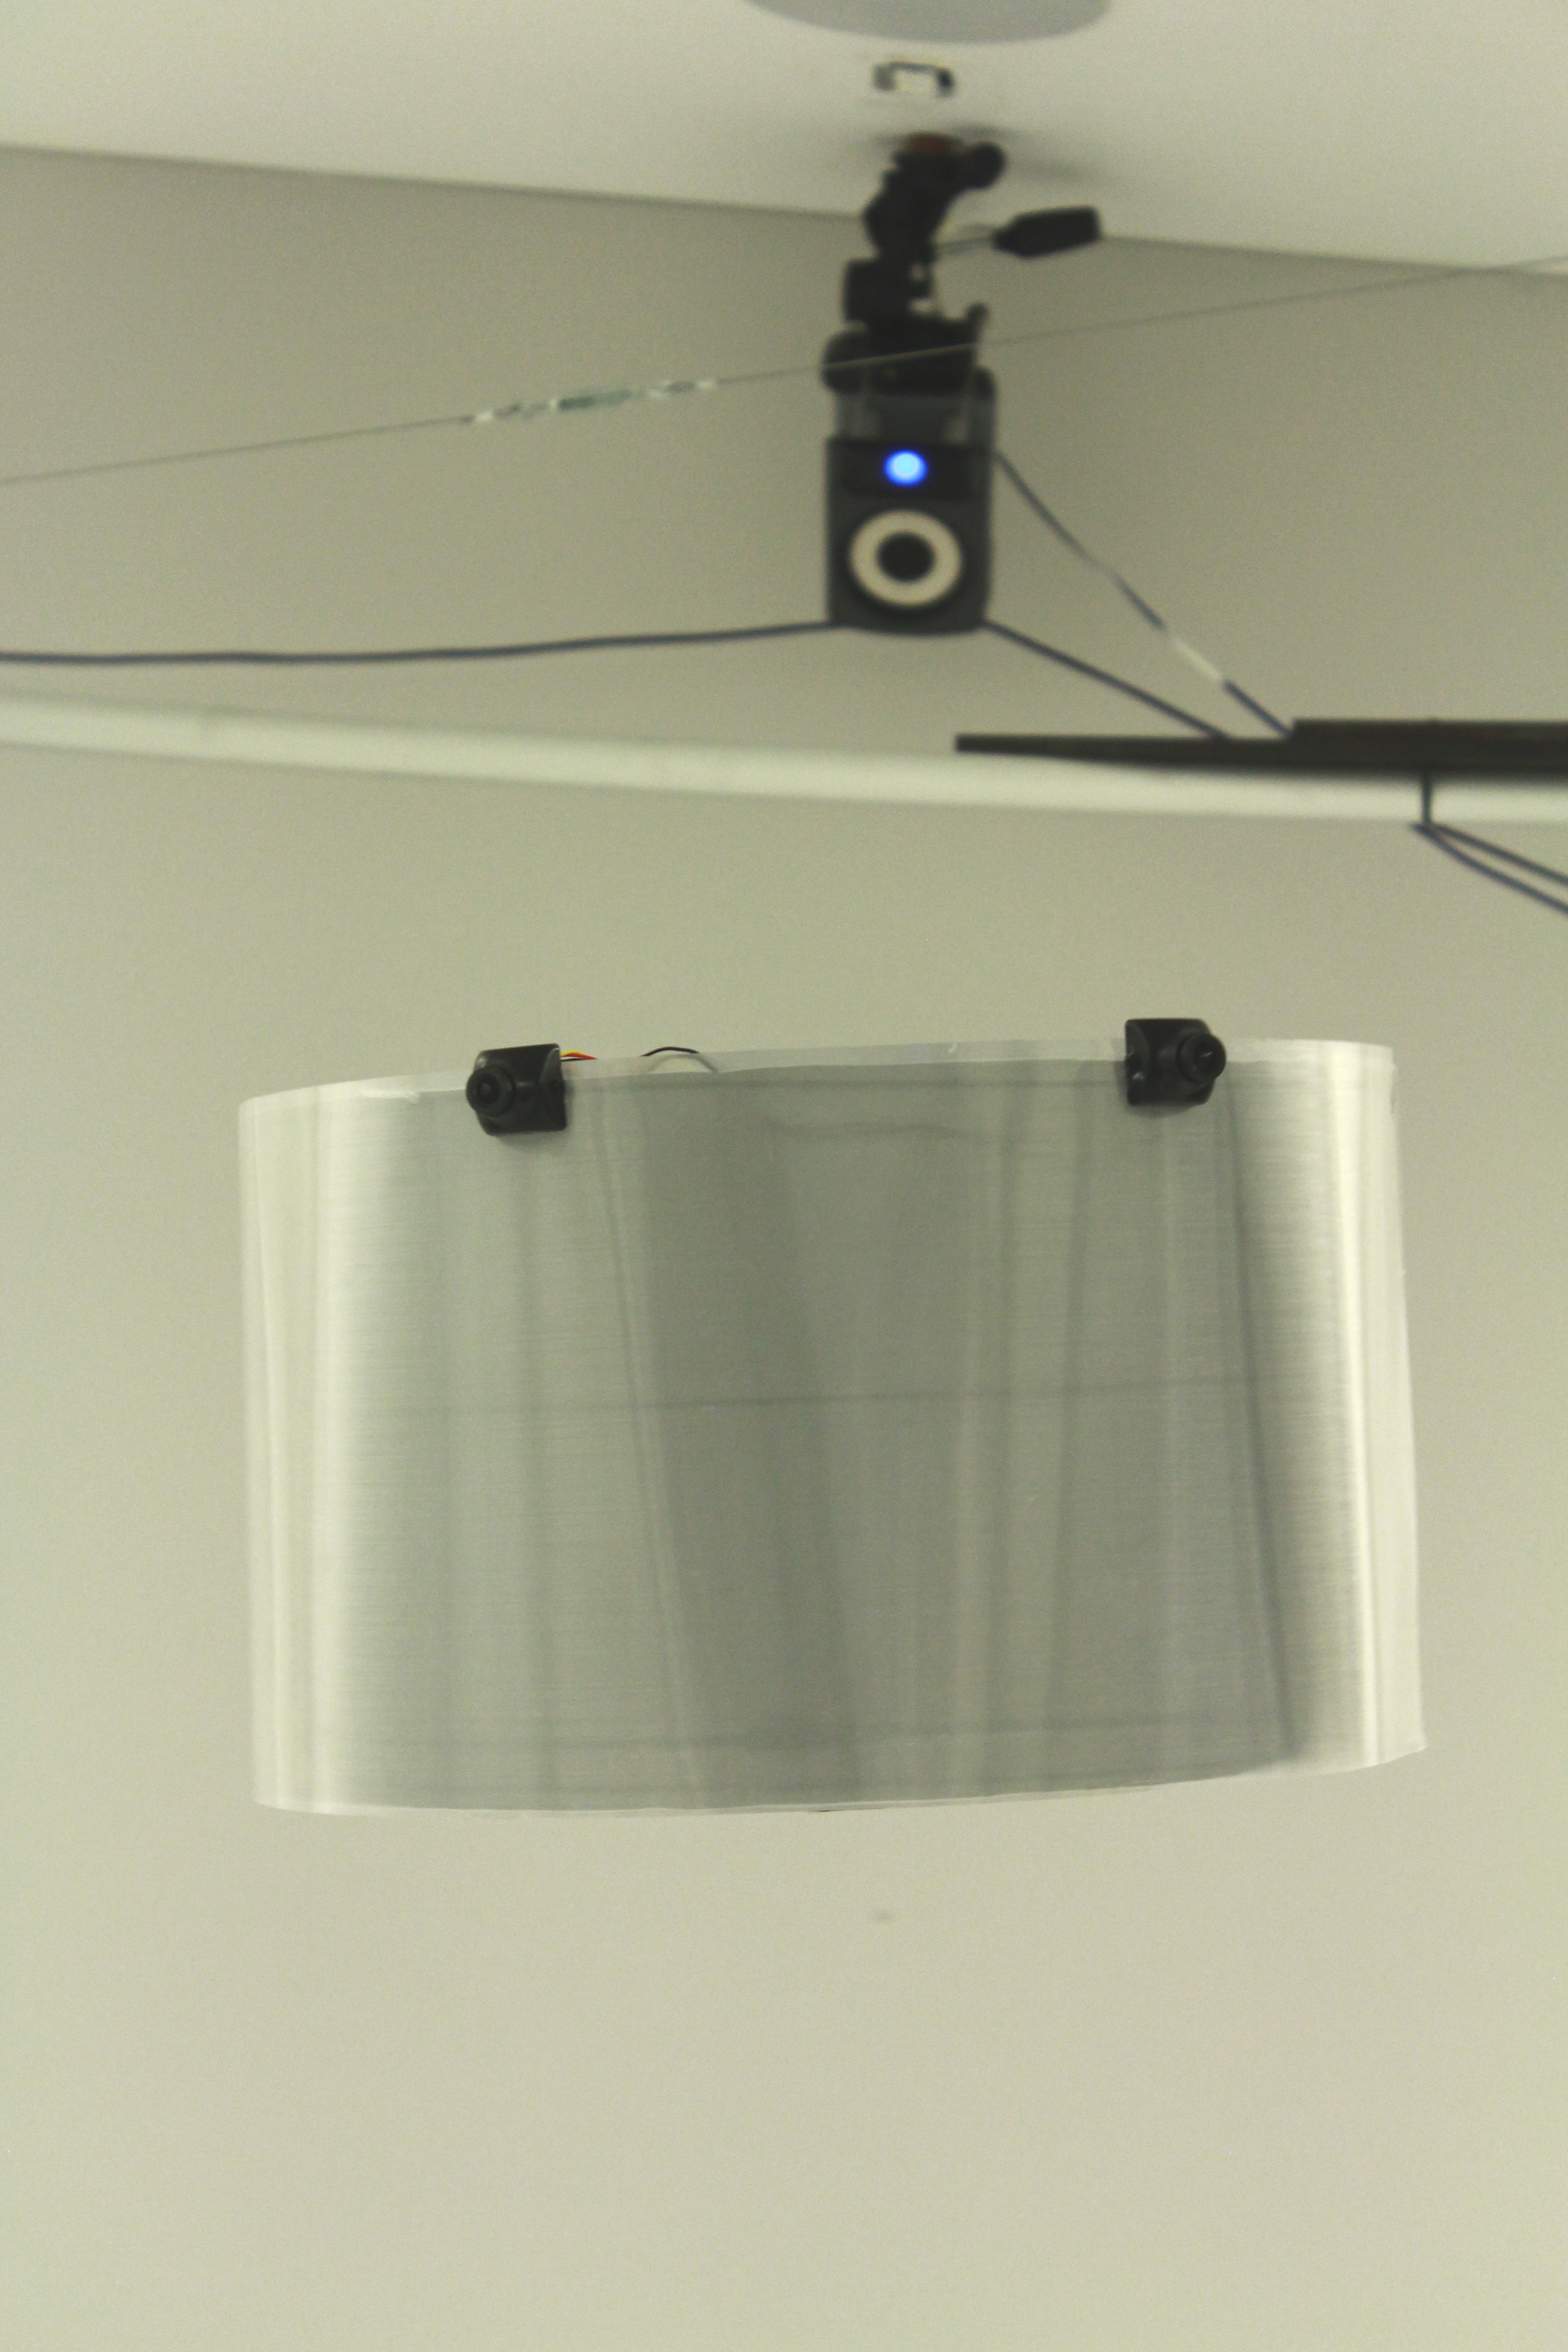 LightBee retroreflective drone